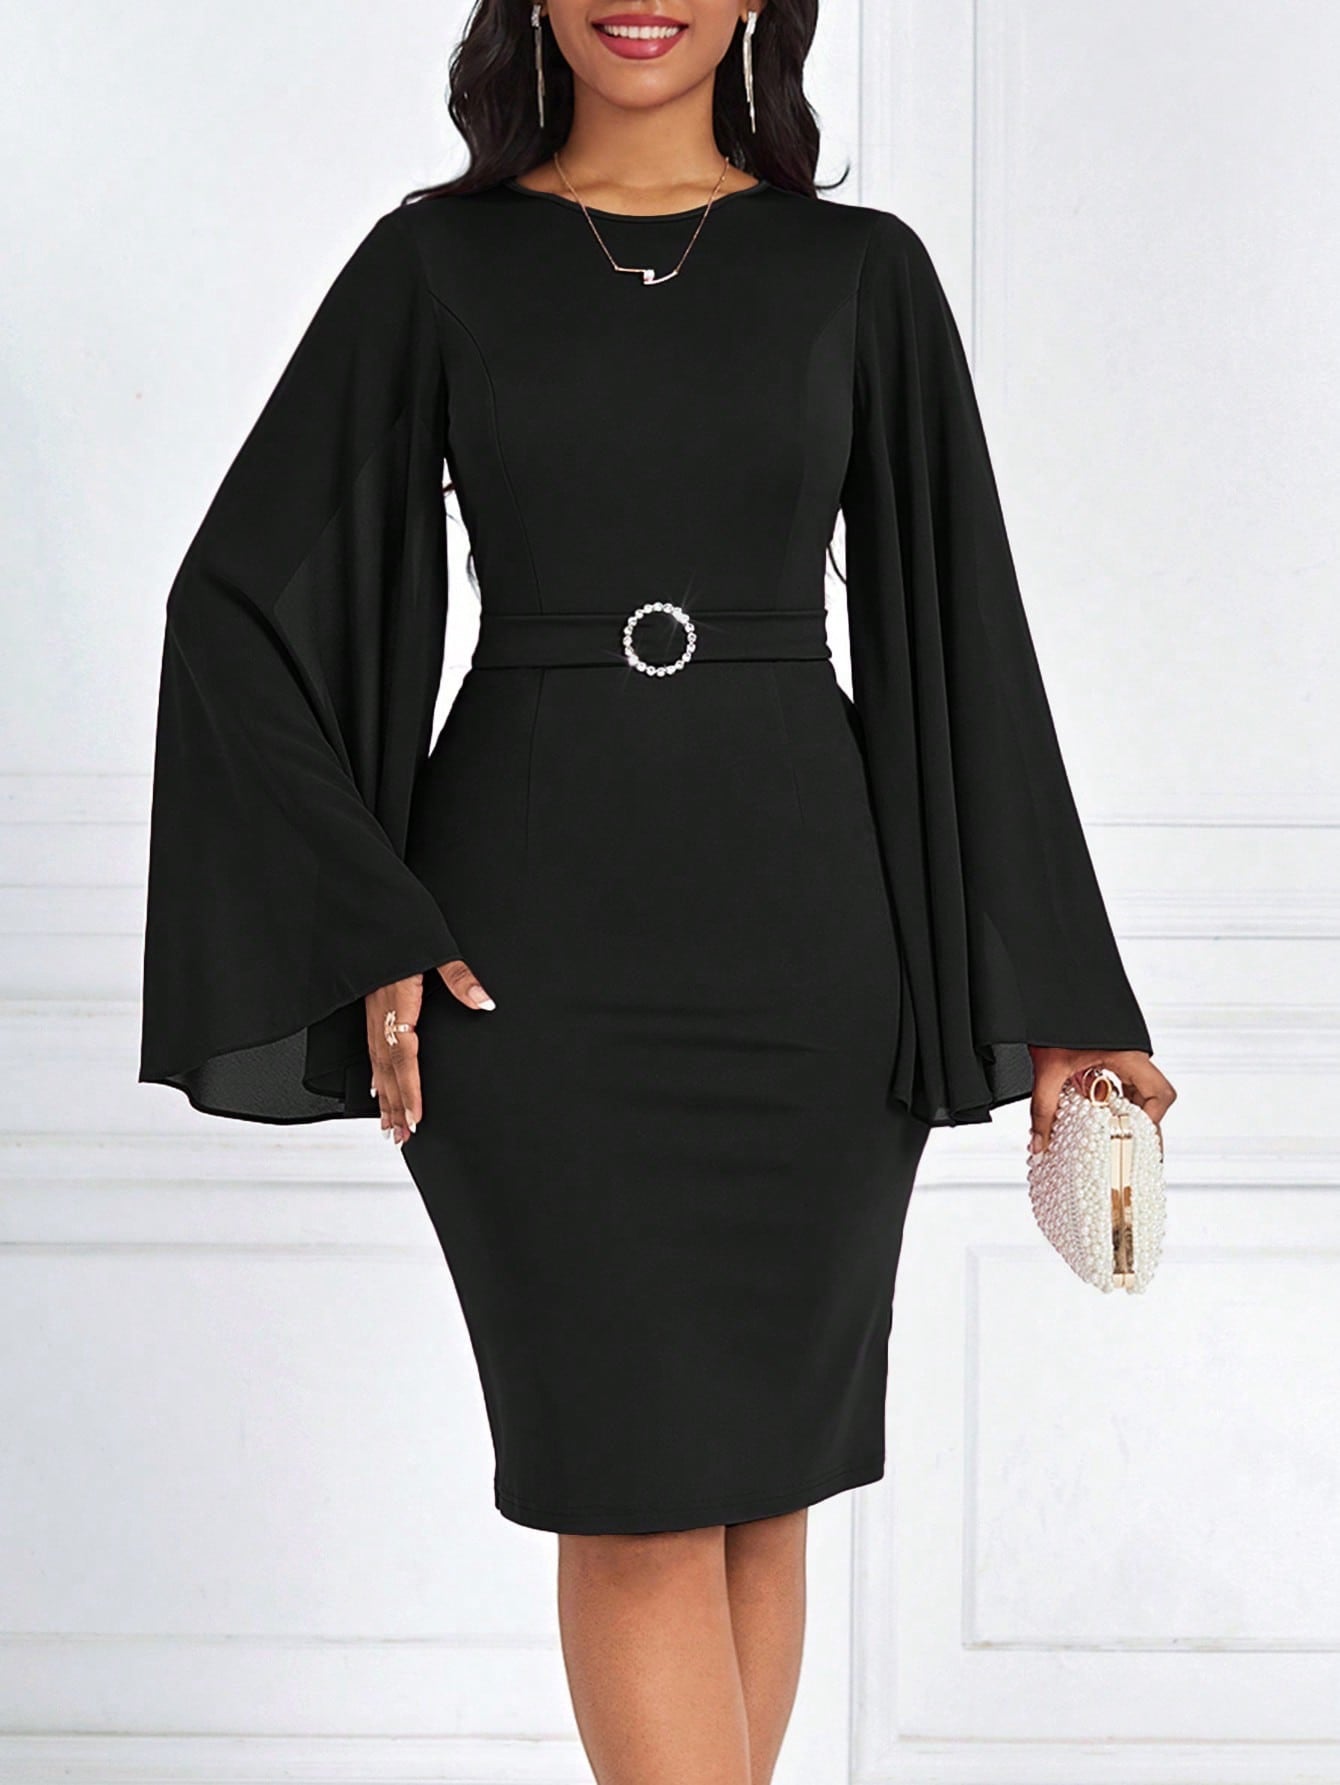 Rhinestone Dress - Black